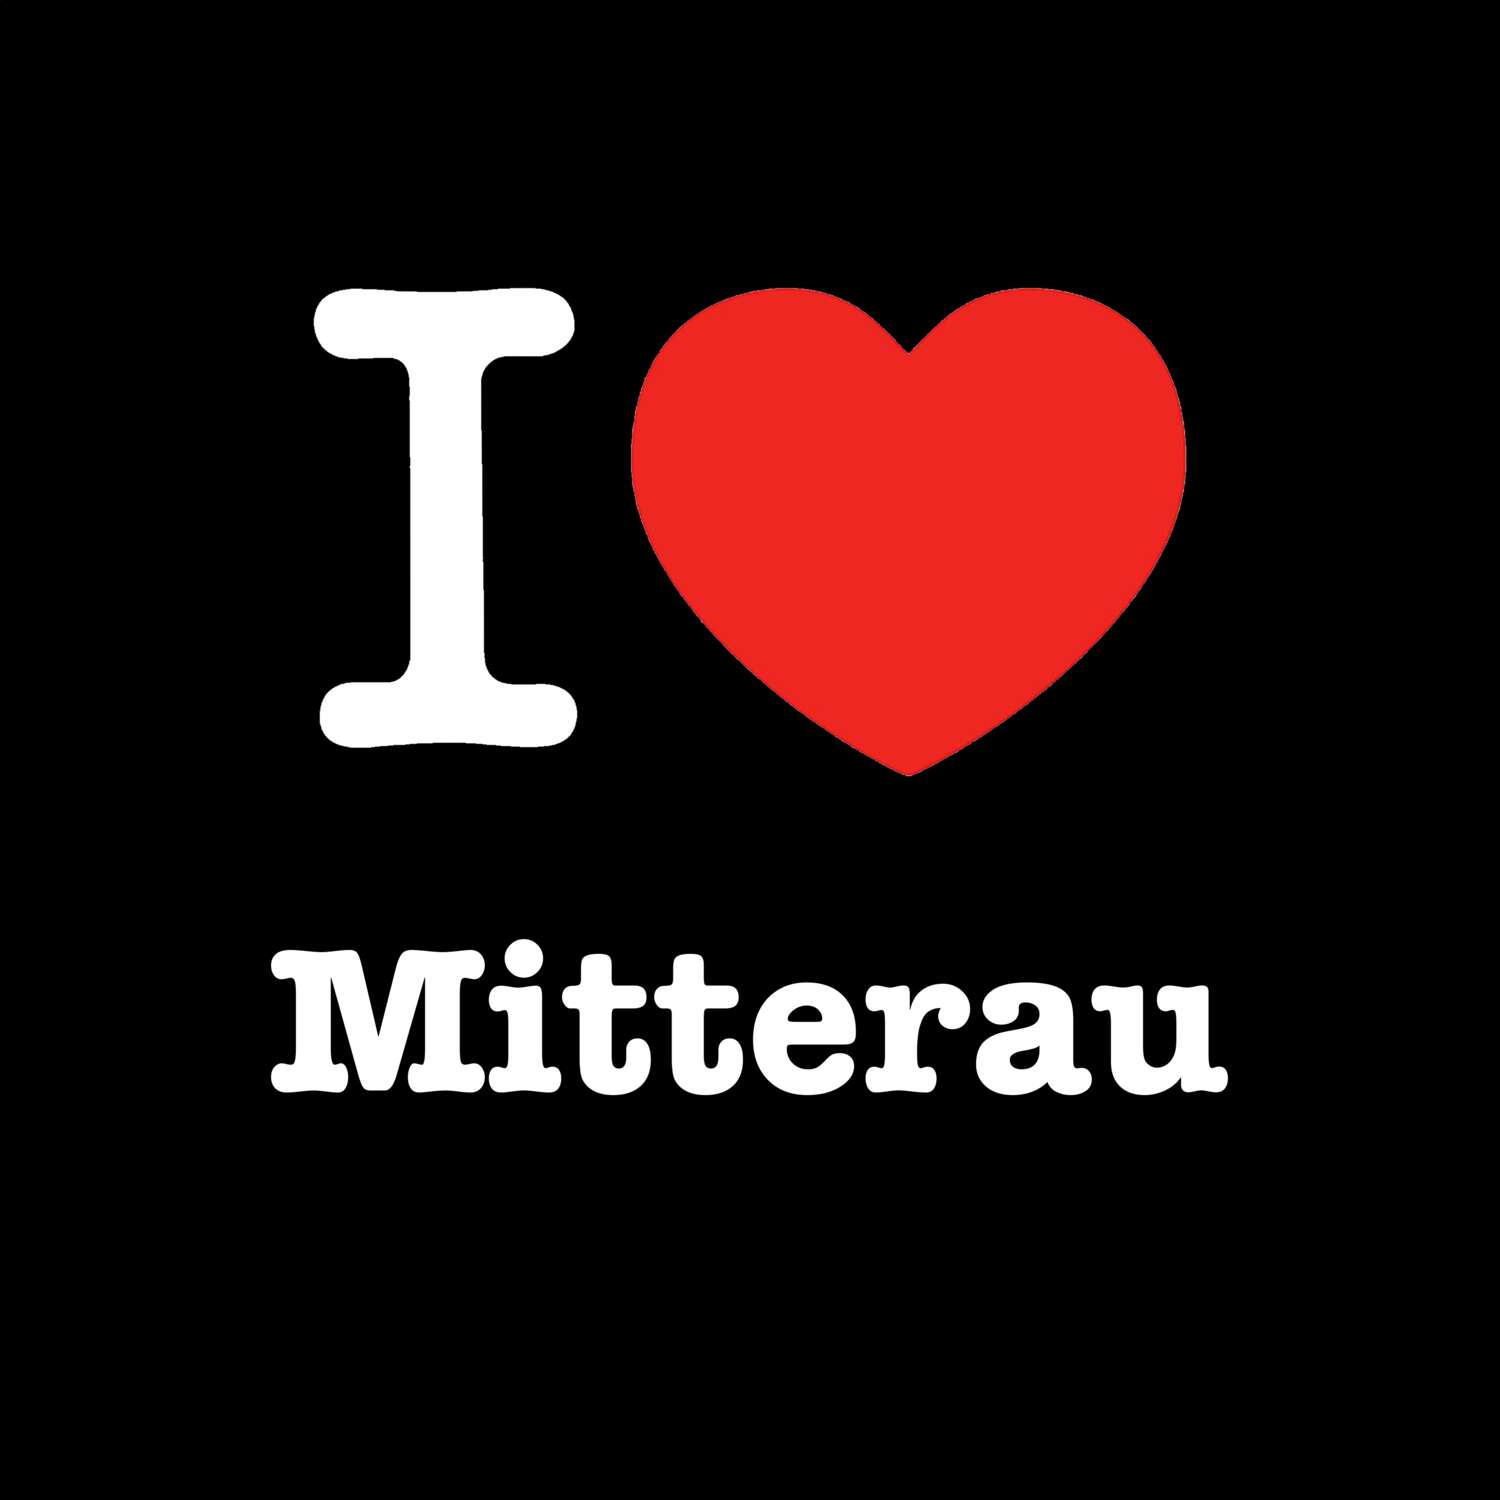 Mitterau T-Shirt »I love«